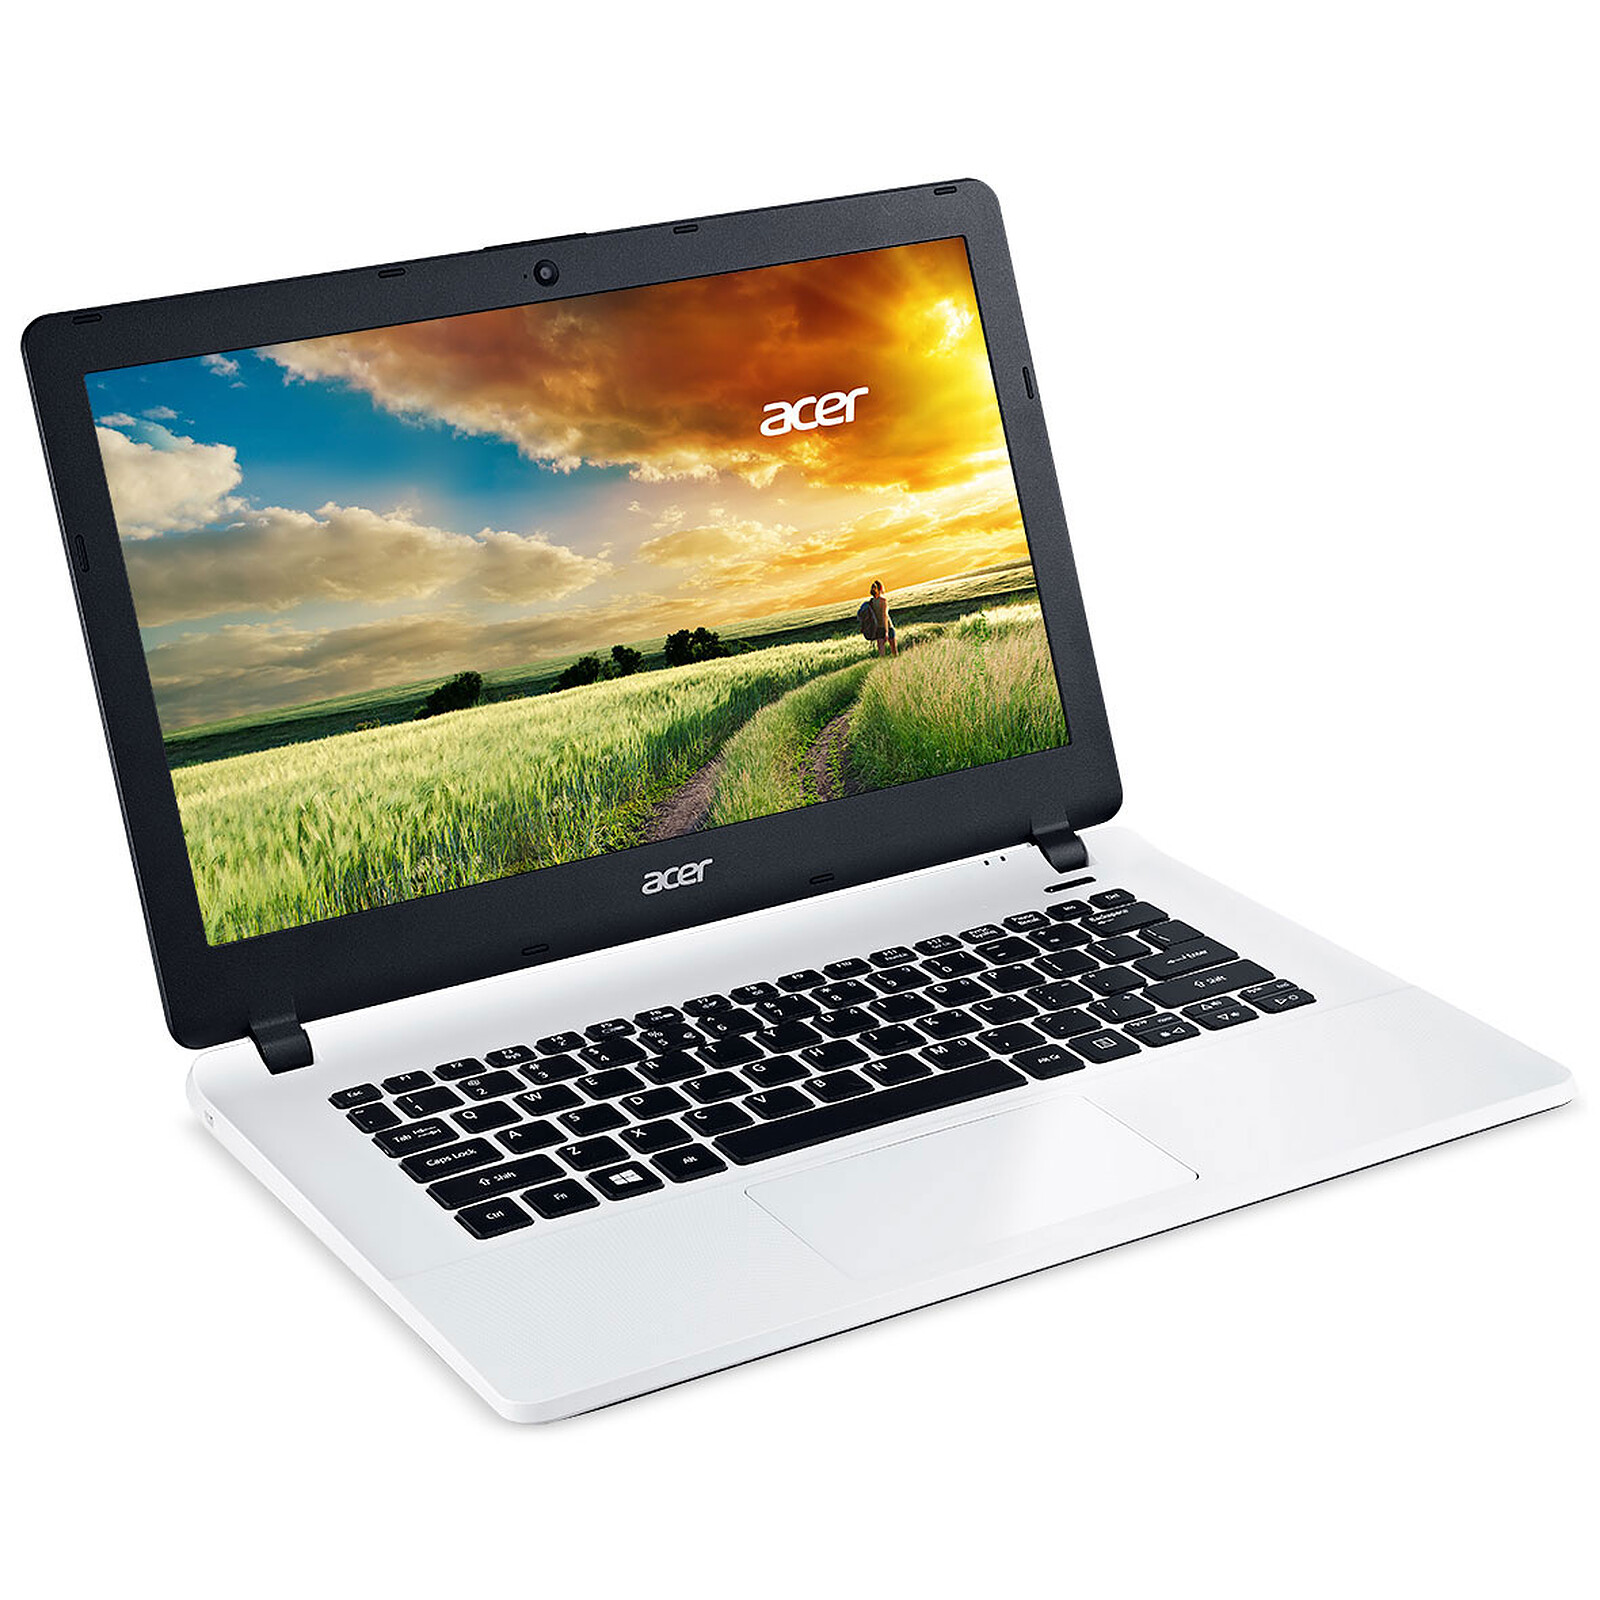 Ноутбуки асер отзывы. Ноутбук Acer Aspire es1-311-p4ew. Асер es1-331. Es1-331 Acer n15w3. Acer es1-331-p1fq.